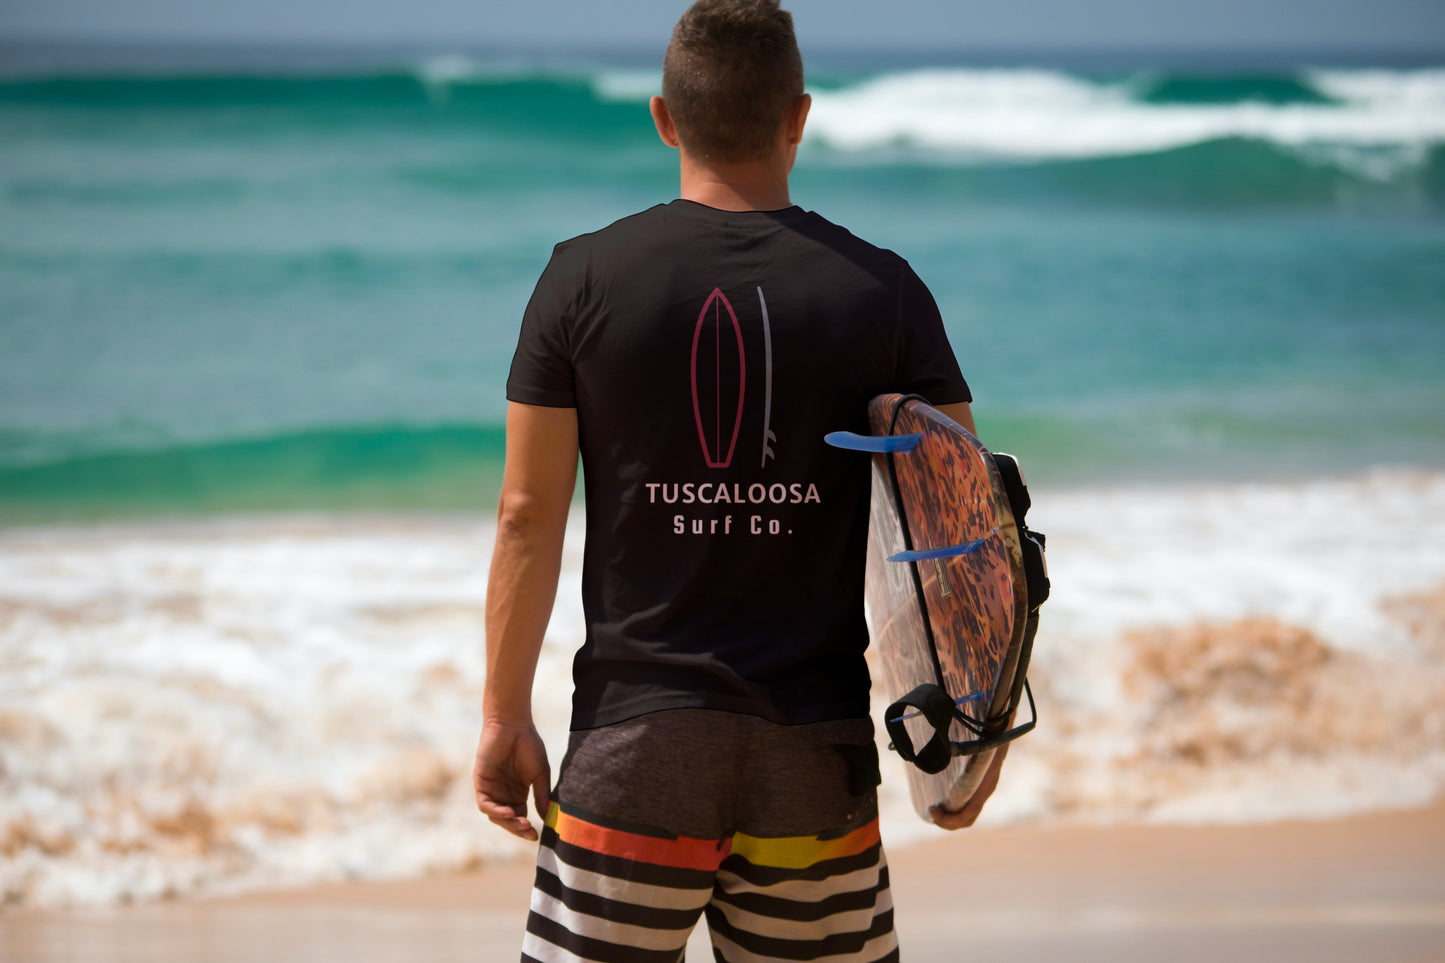 Tuscaloosa Surf Co. Black Surfboard Shirt